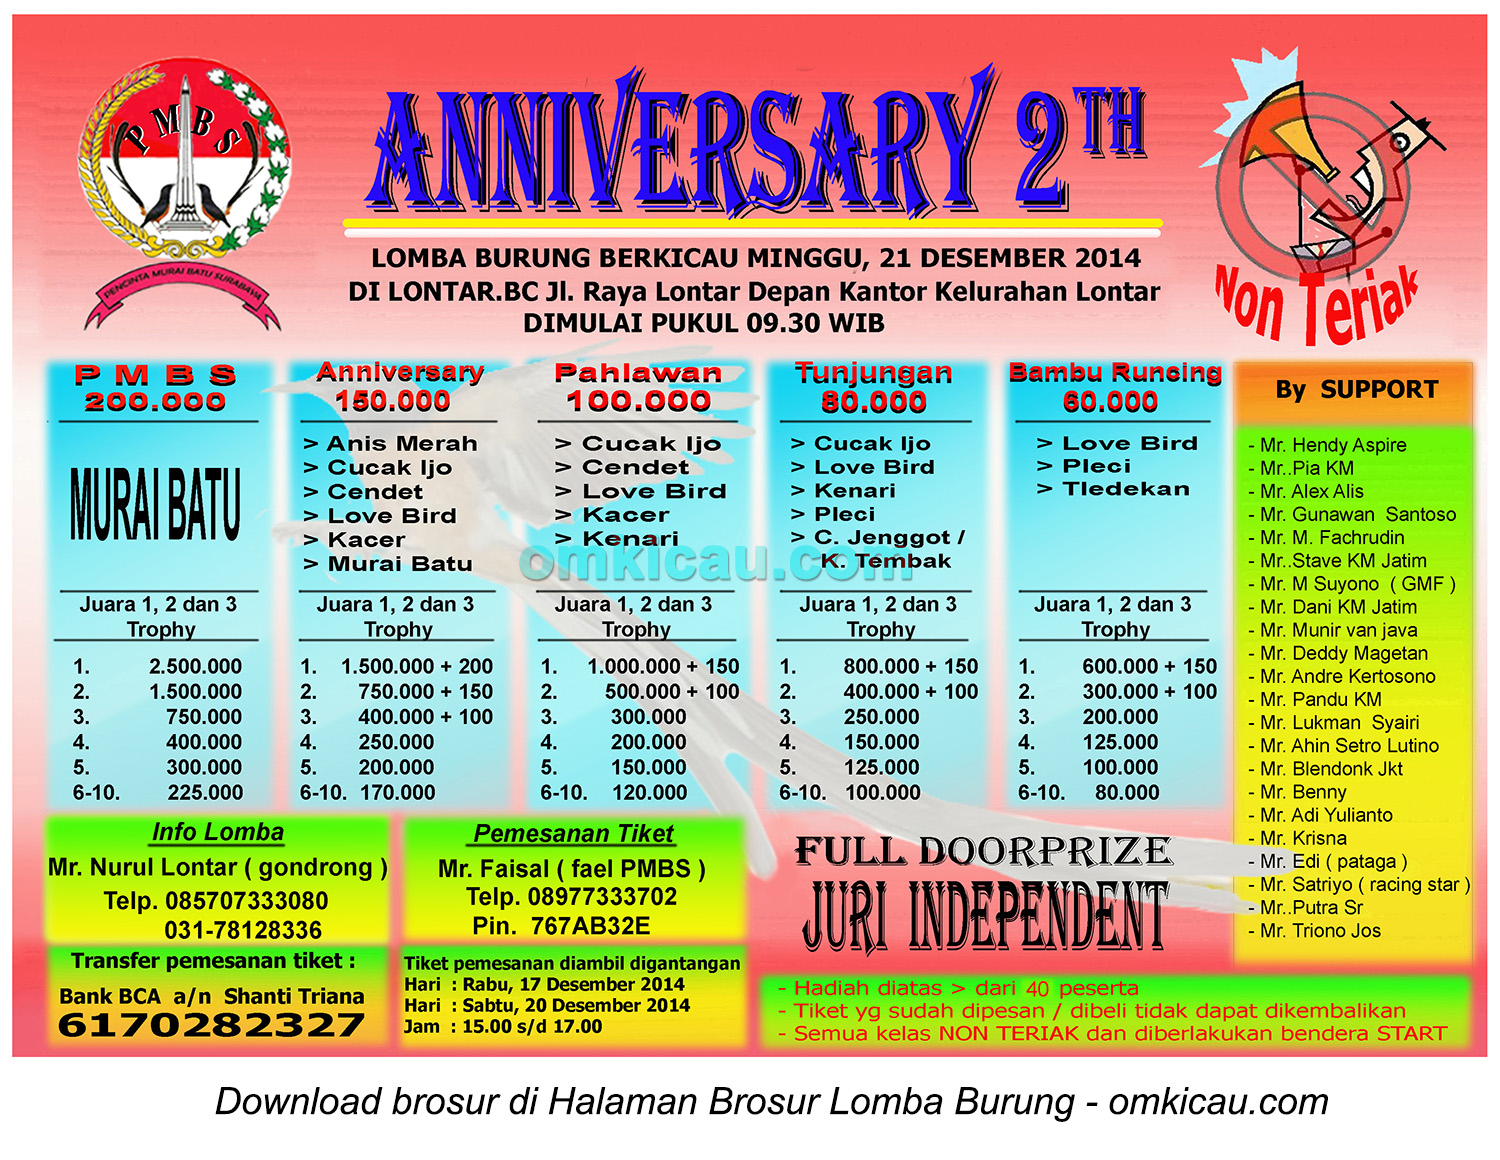 Brosur Lomba Burung Berkicau Anniversary 2th PMBS, Surabaya, 21 Desember 2014